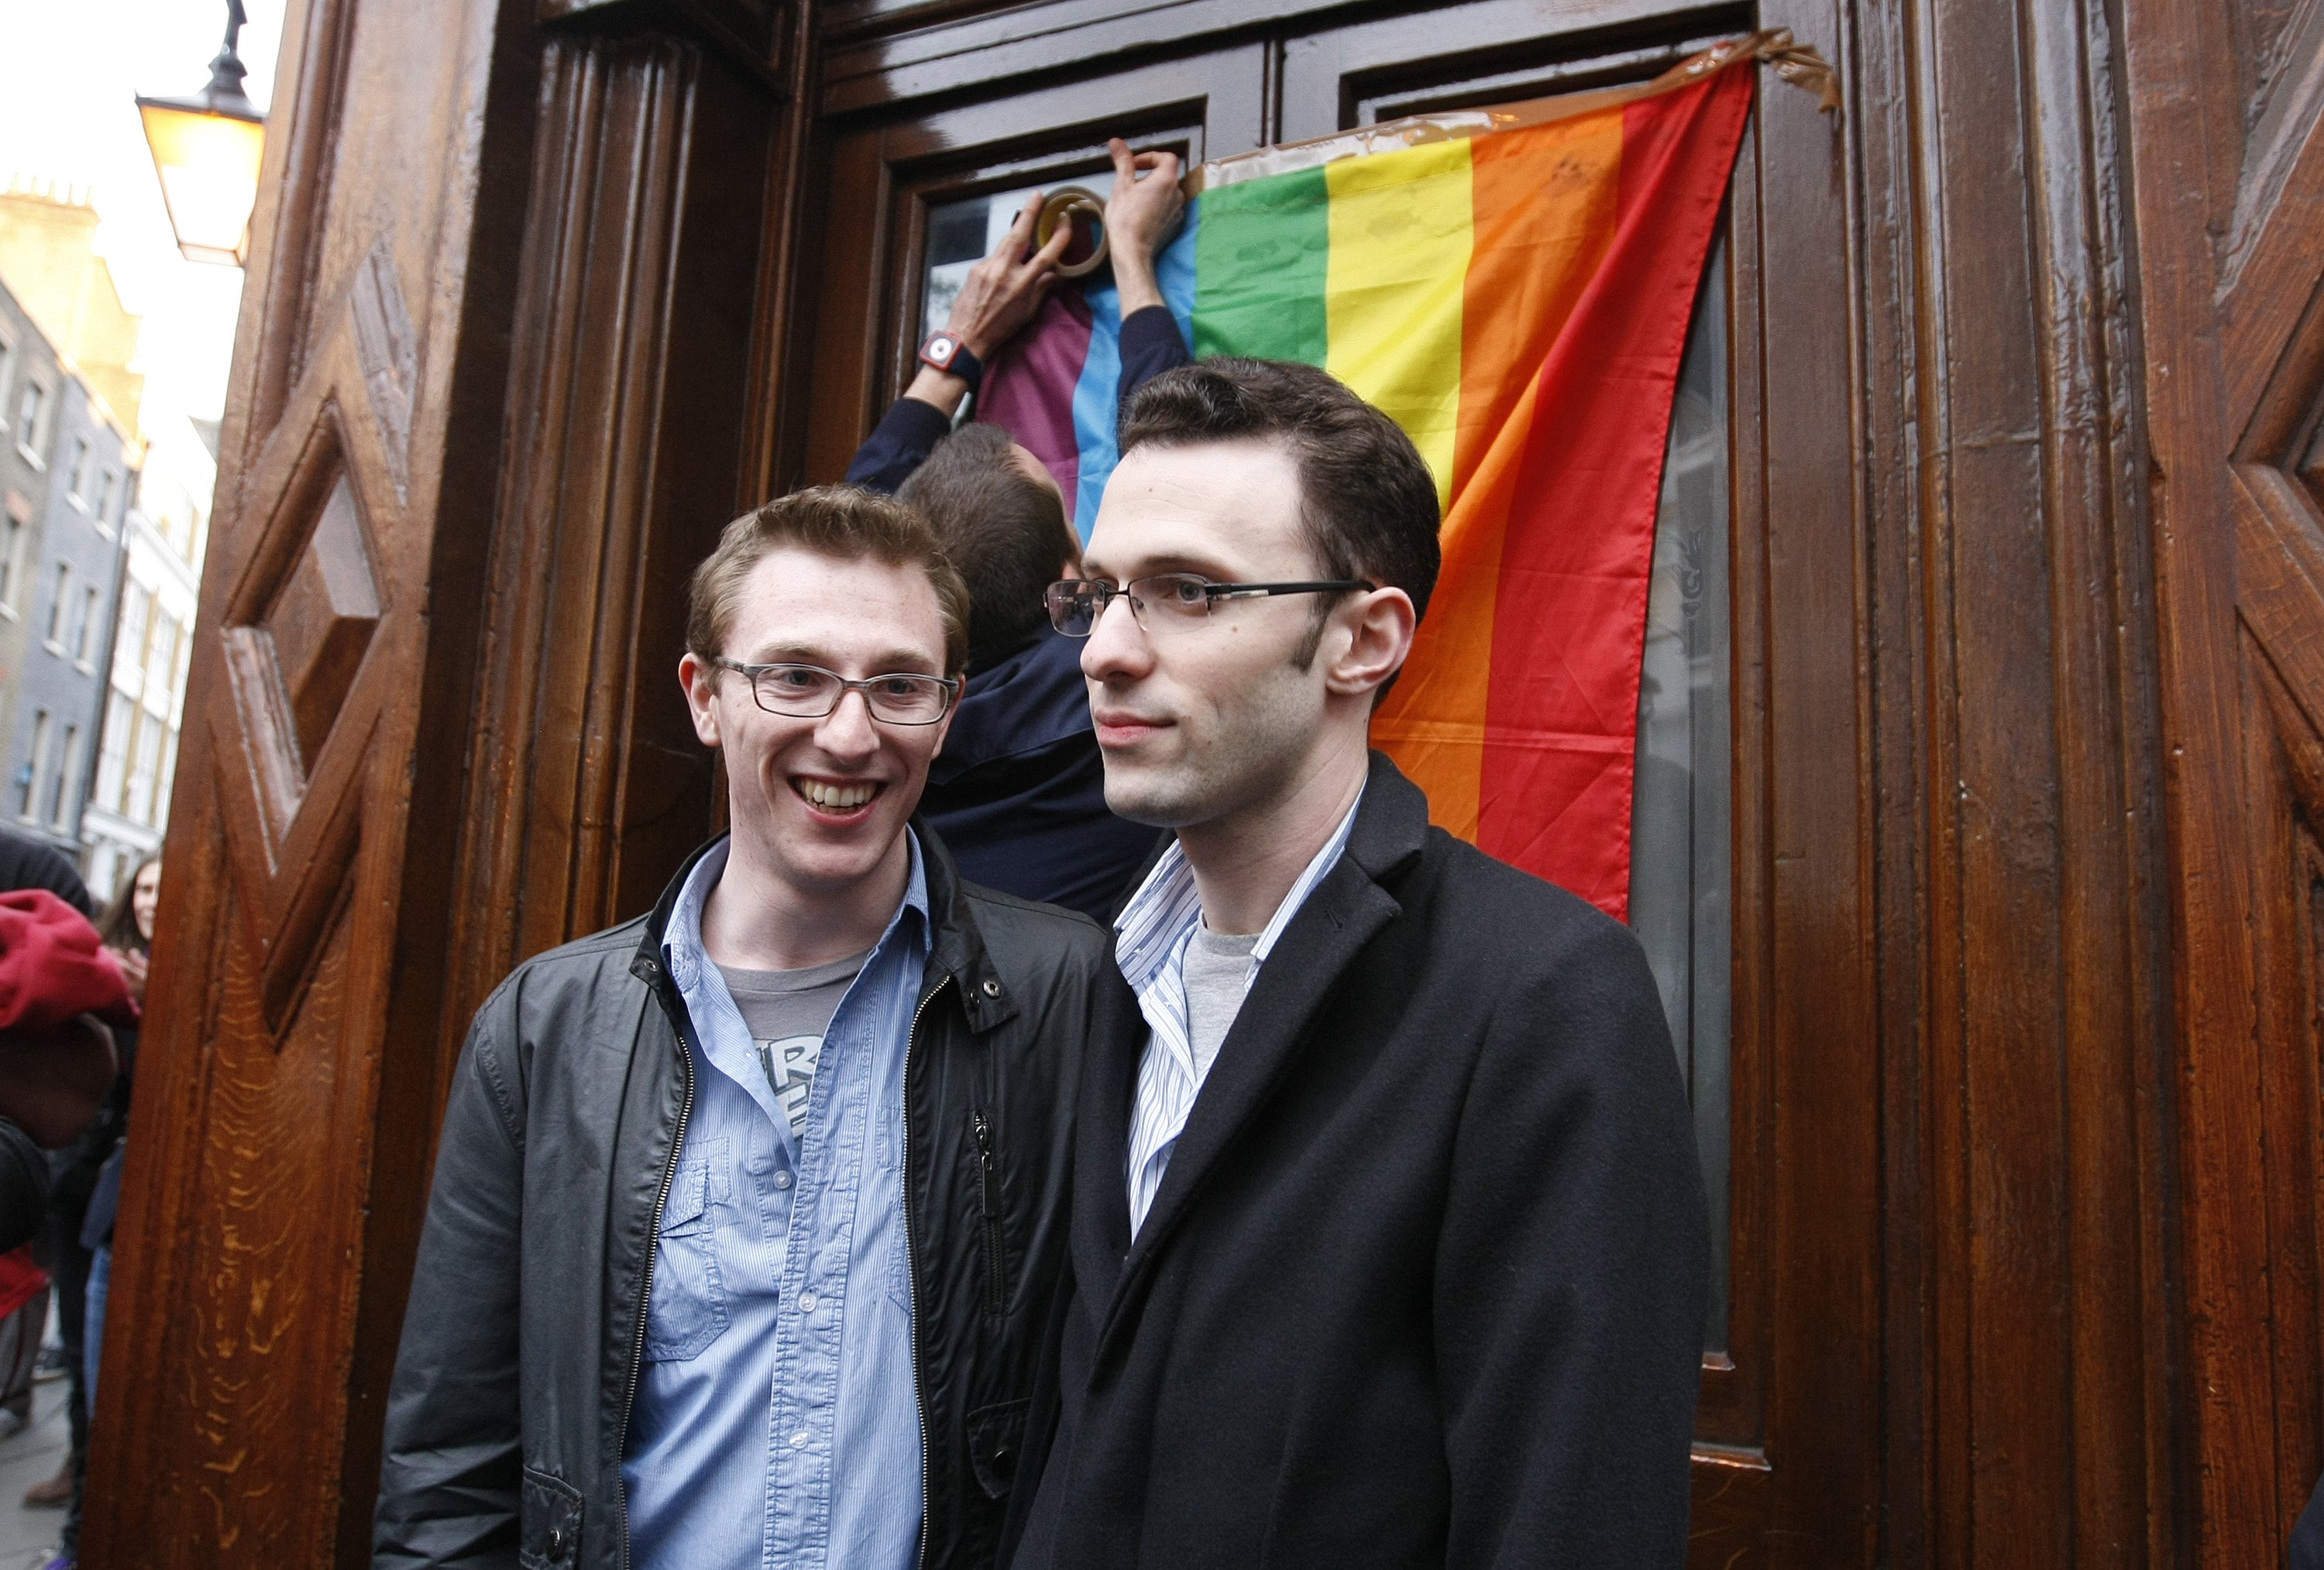 Hångel, HBT, HBTQ, Pride, Homosexualitet, Kyss, London, England, Protest, homofobi